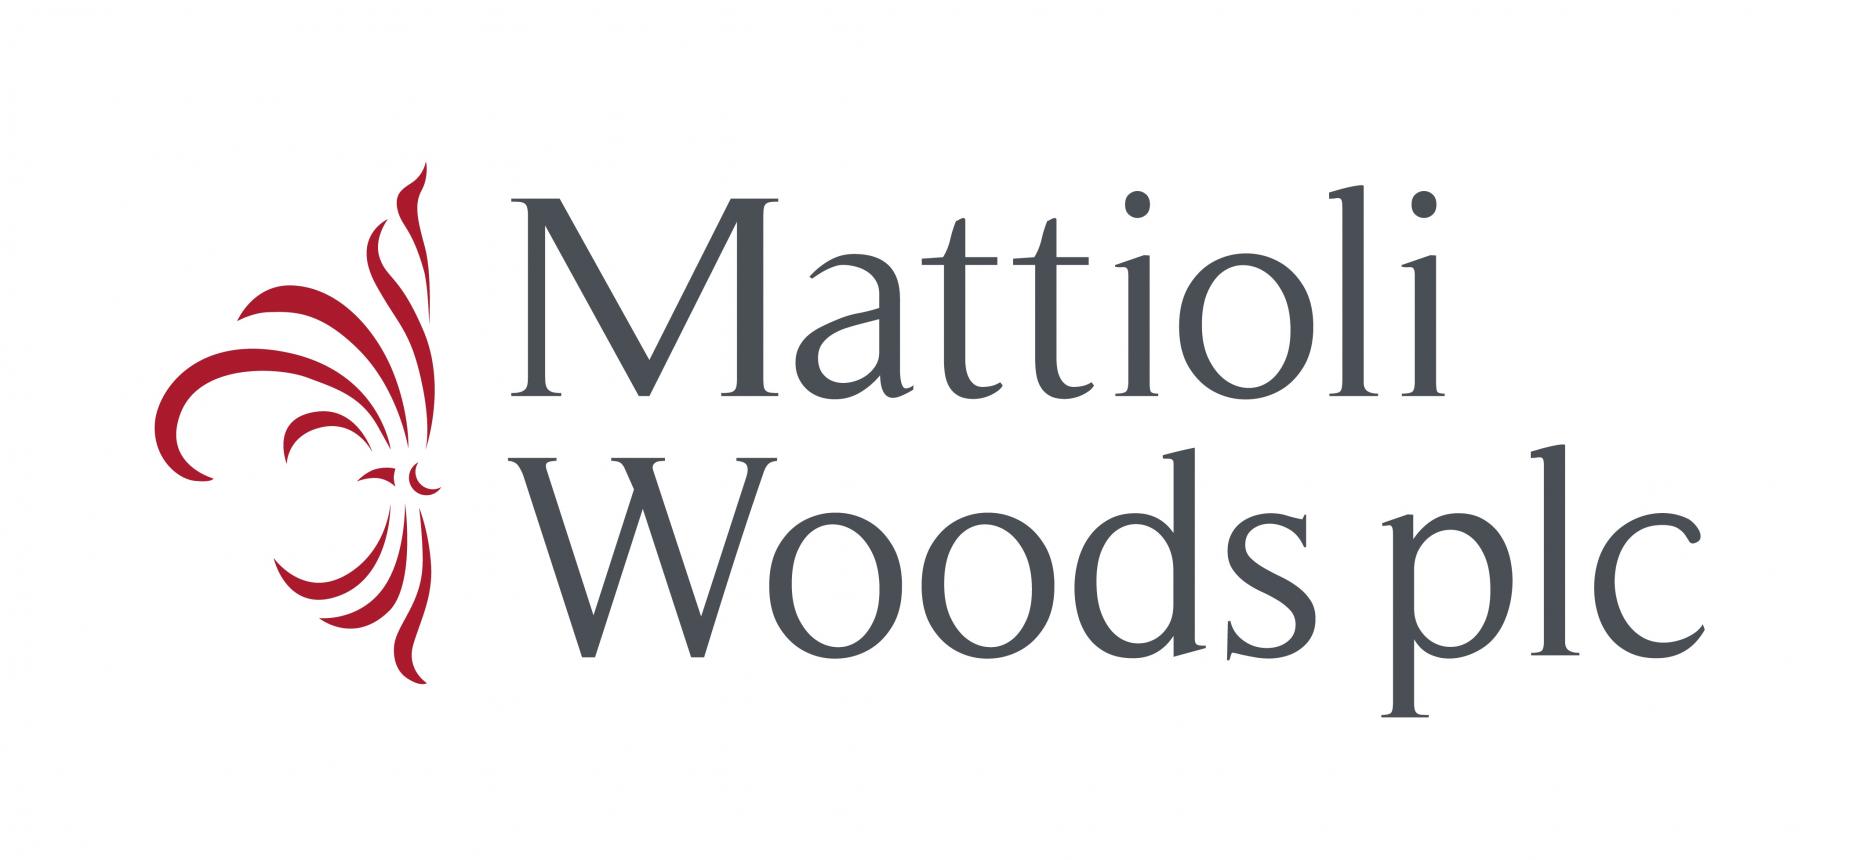 Mattioli Woods